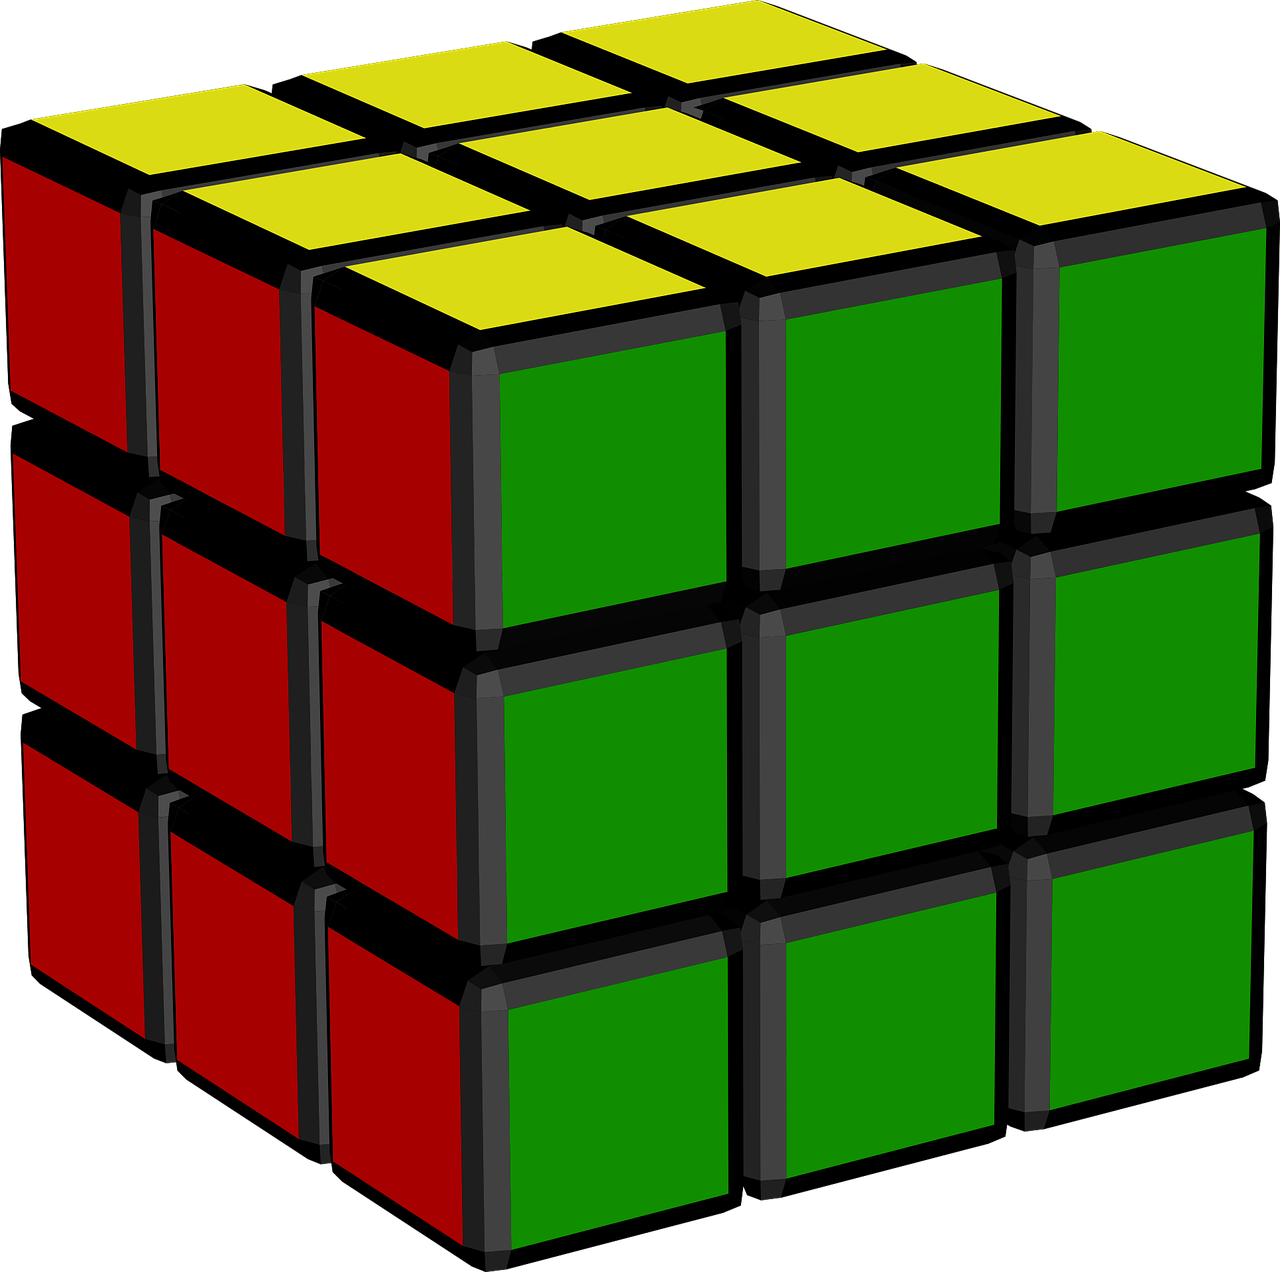 cube game rubik's cube free photo